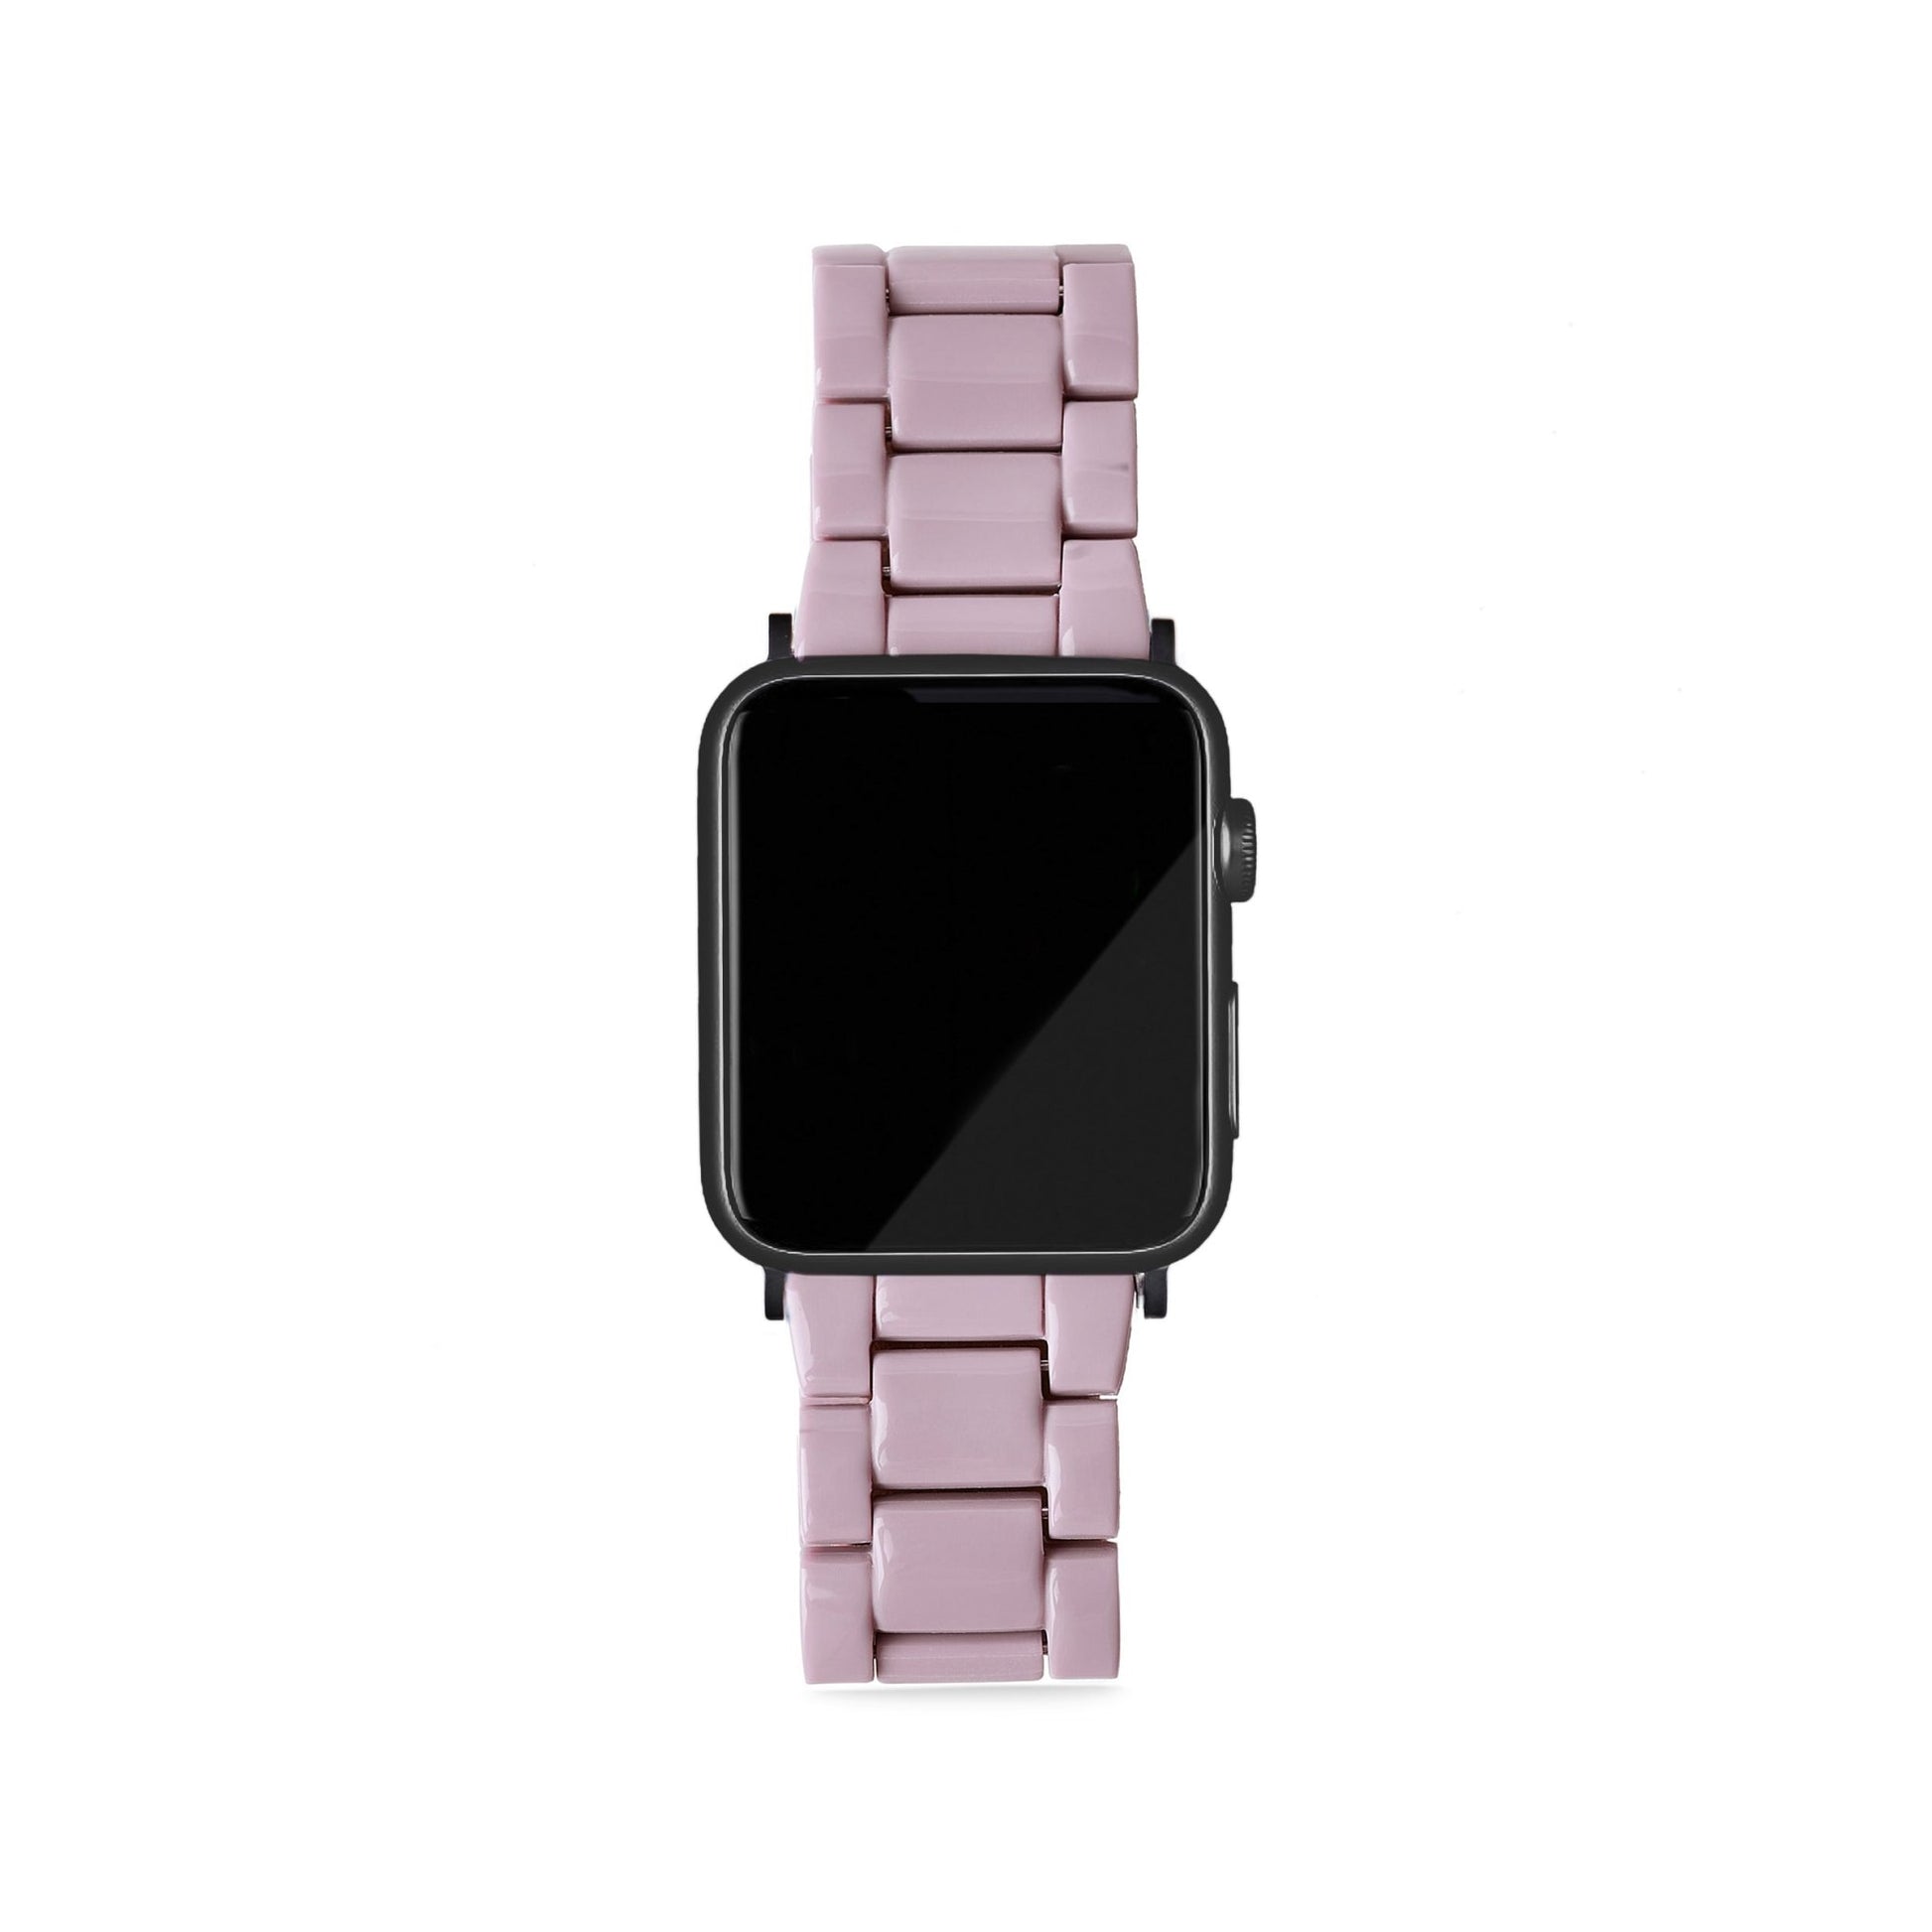 MACHETE Apple Watch Band in Rose Mauve